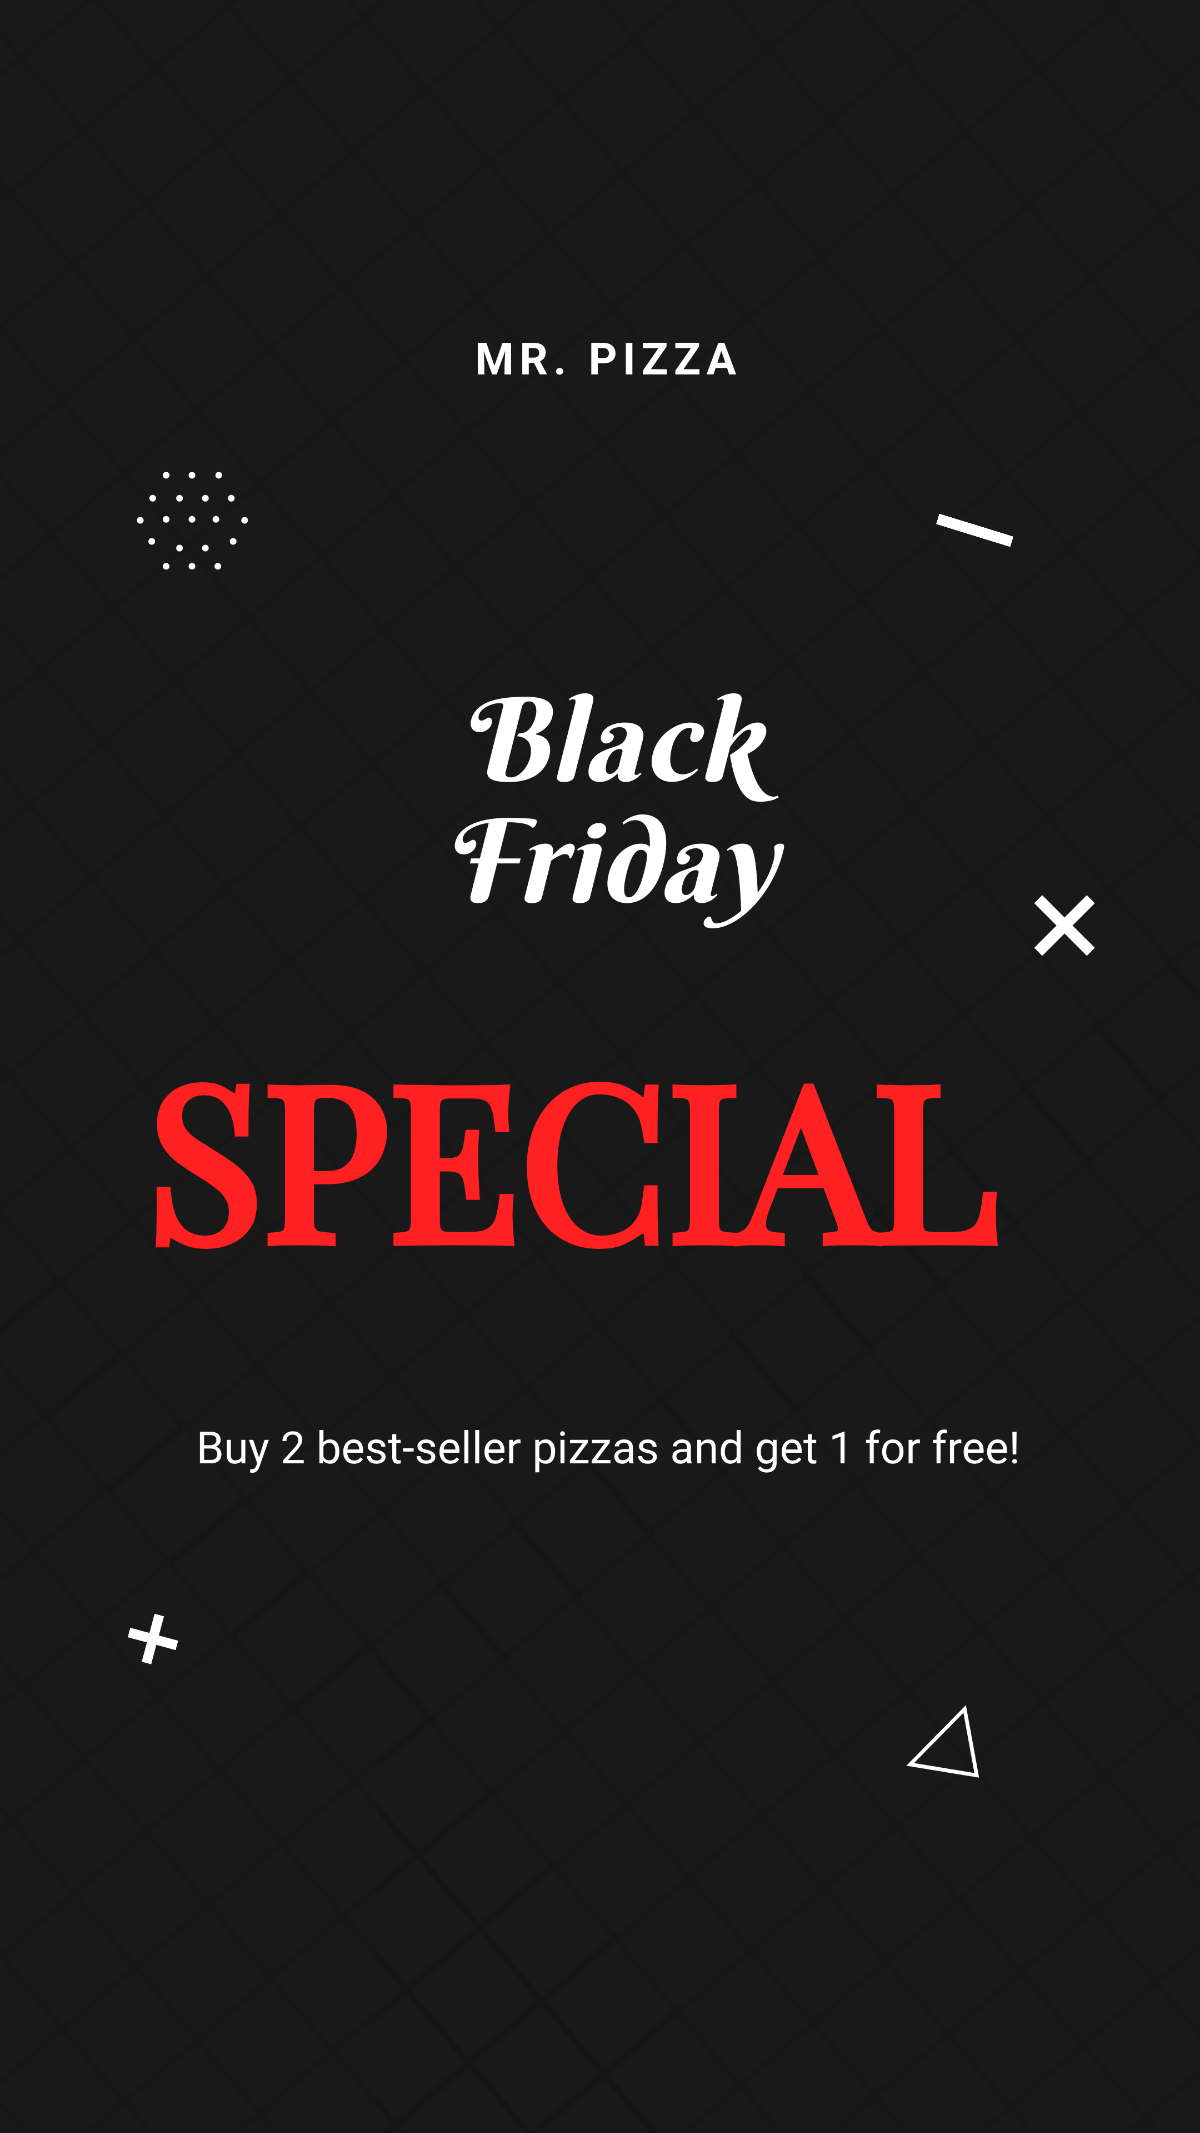 Black Friday Sale Whatsapp image Template